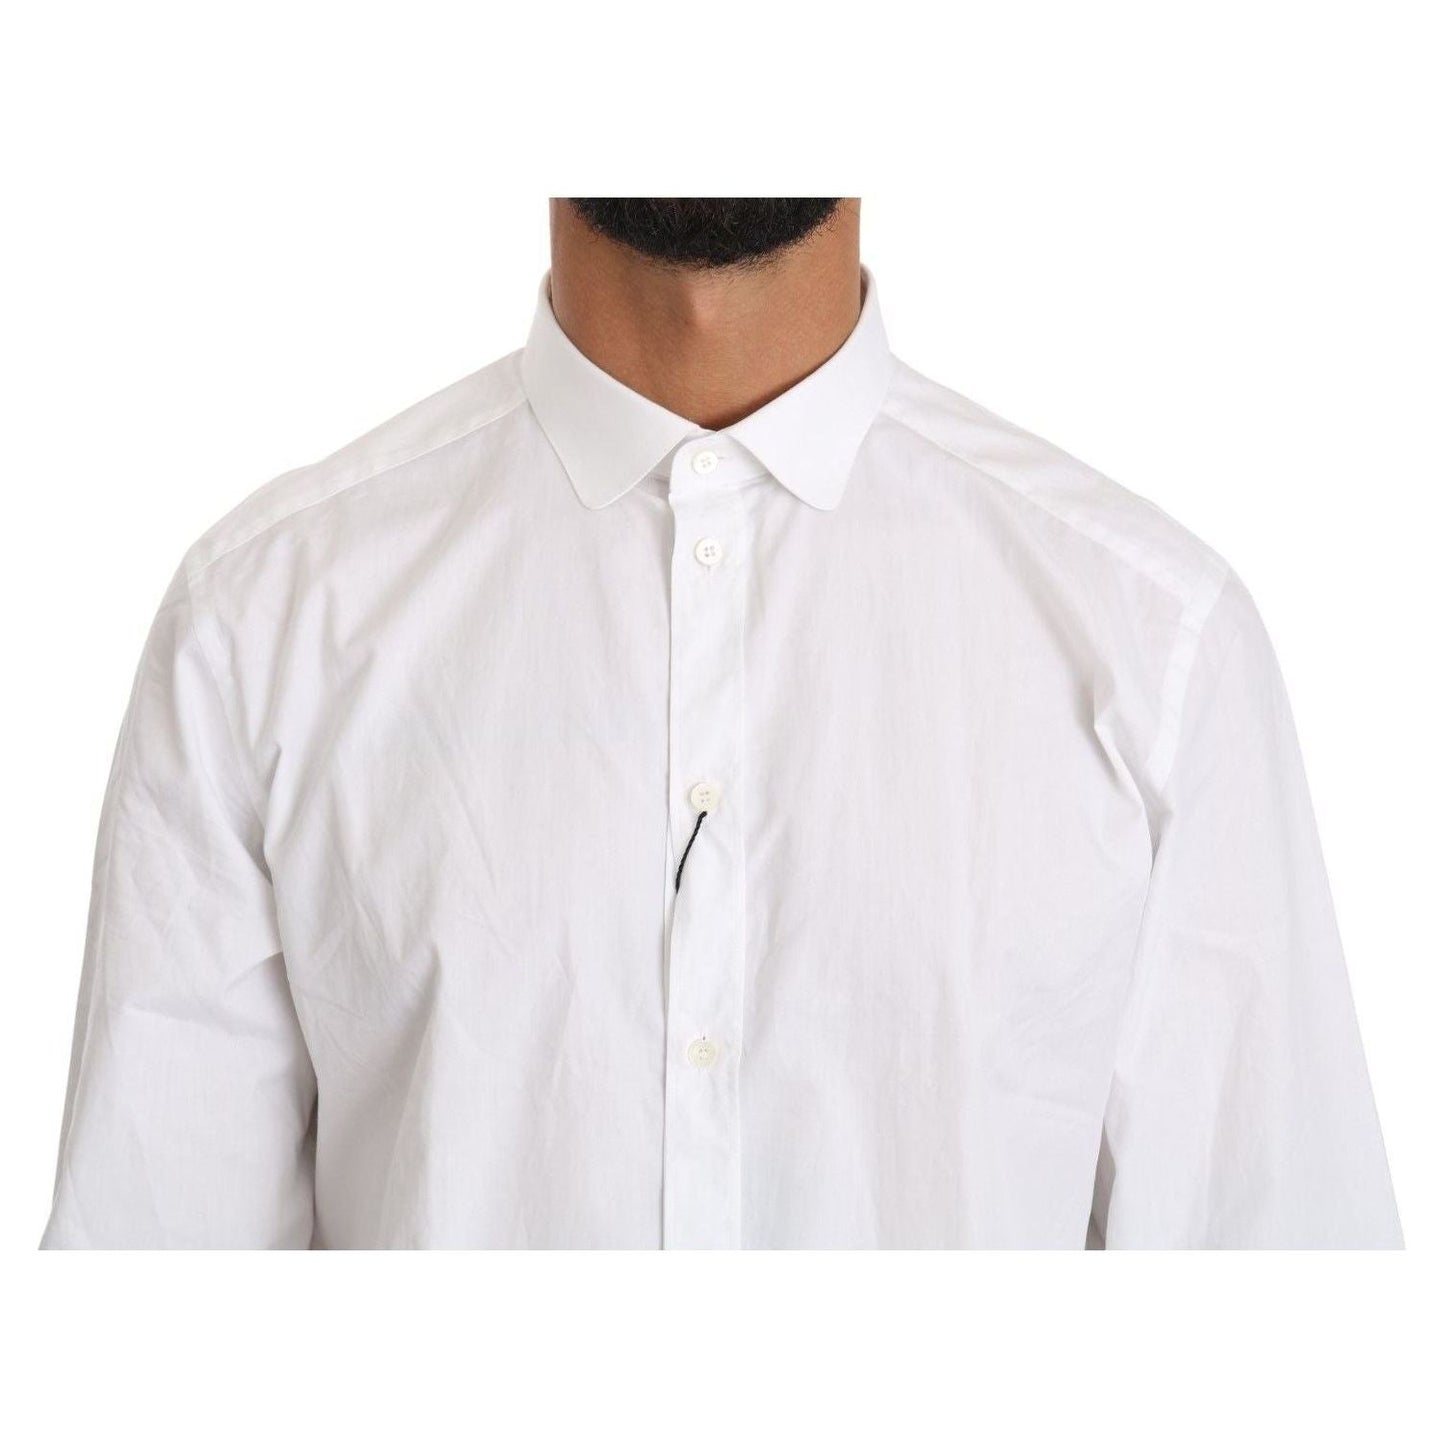 MAN TOPS AND SHIRTS Elegant White Cotton Gold Fit Shirt Dolce & Gabbana